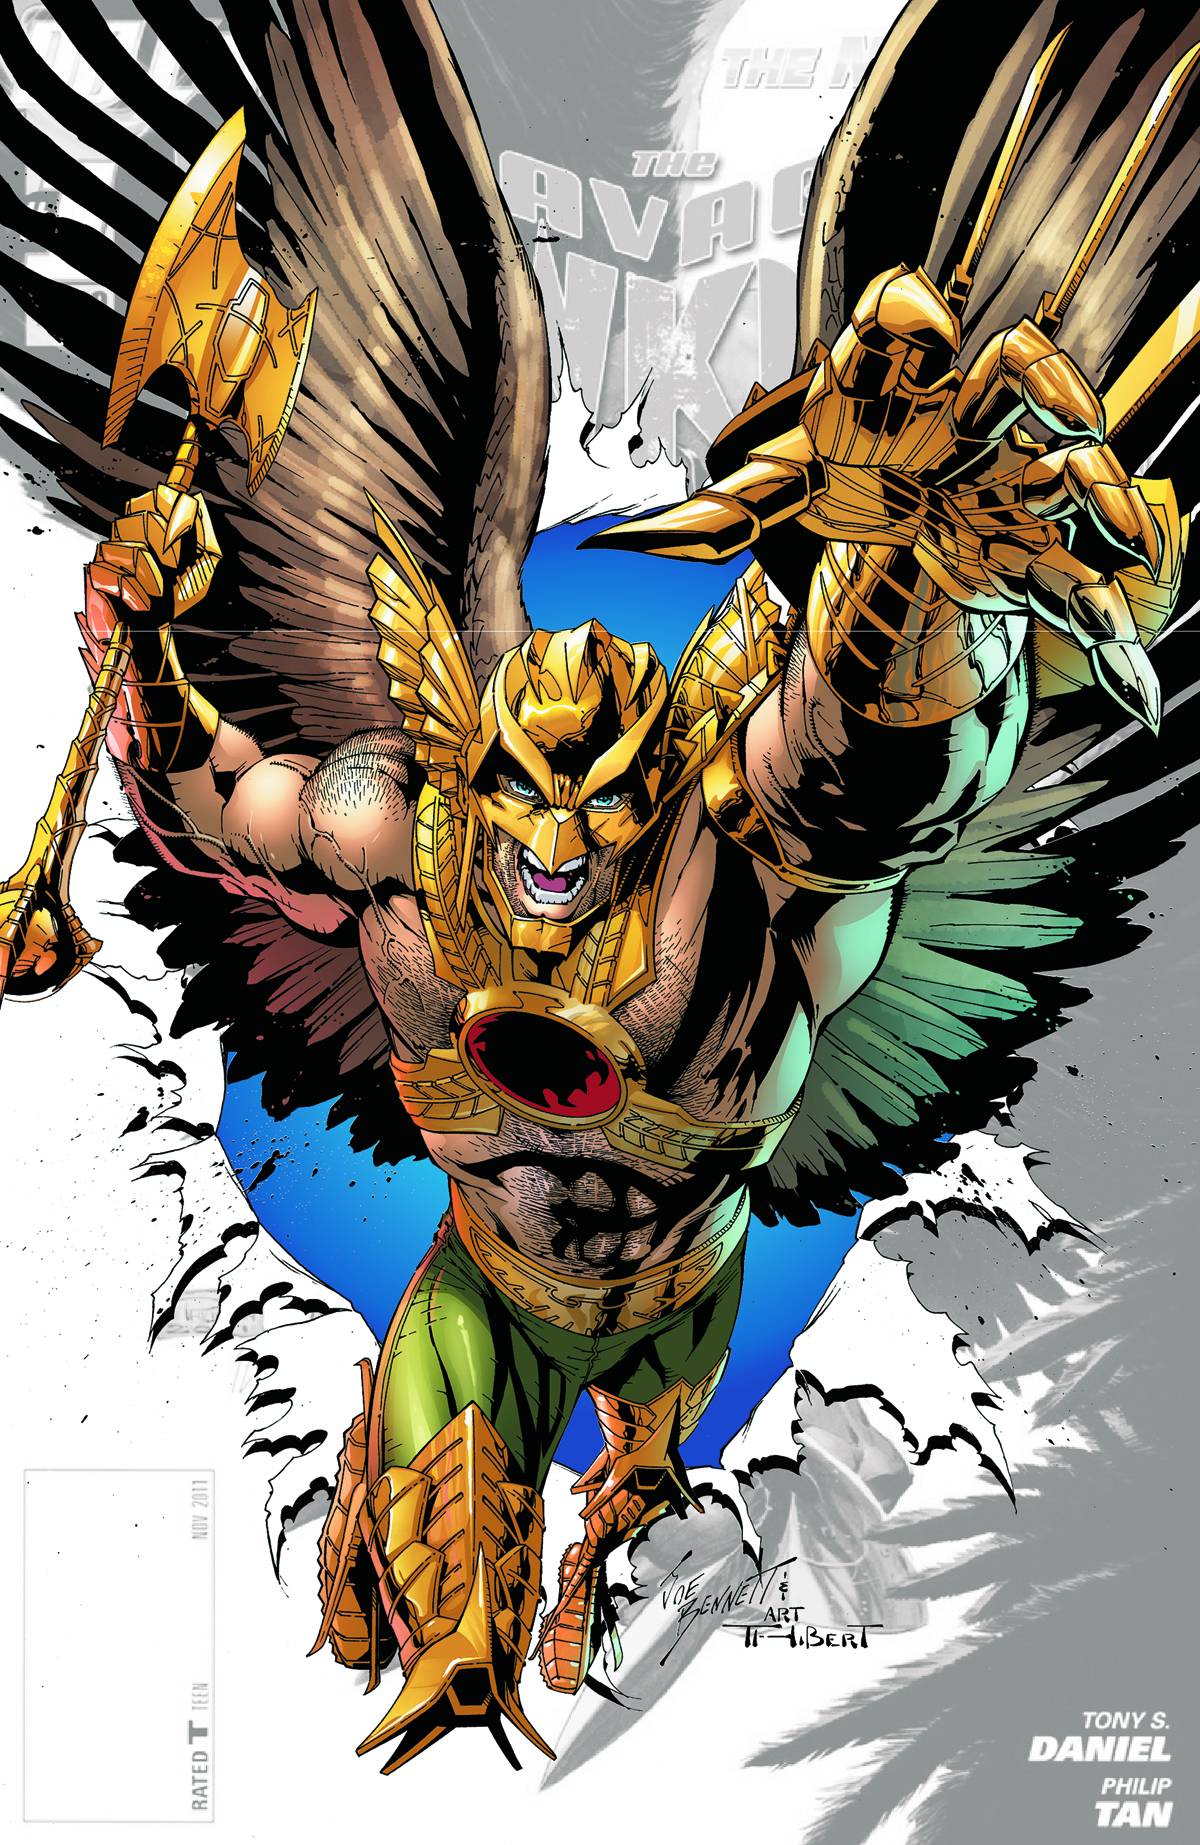 Hawkman #20